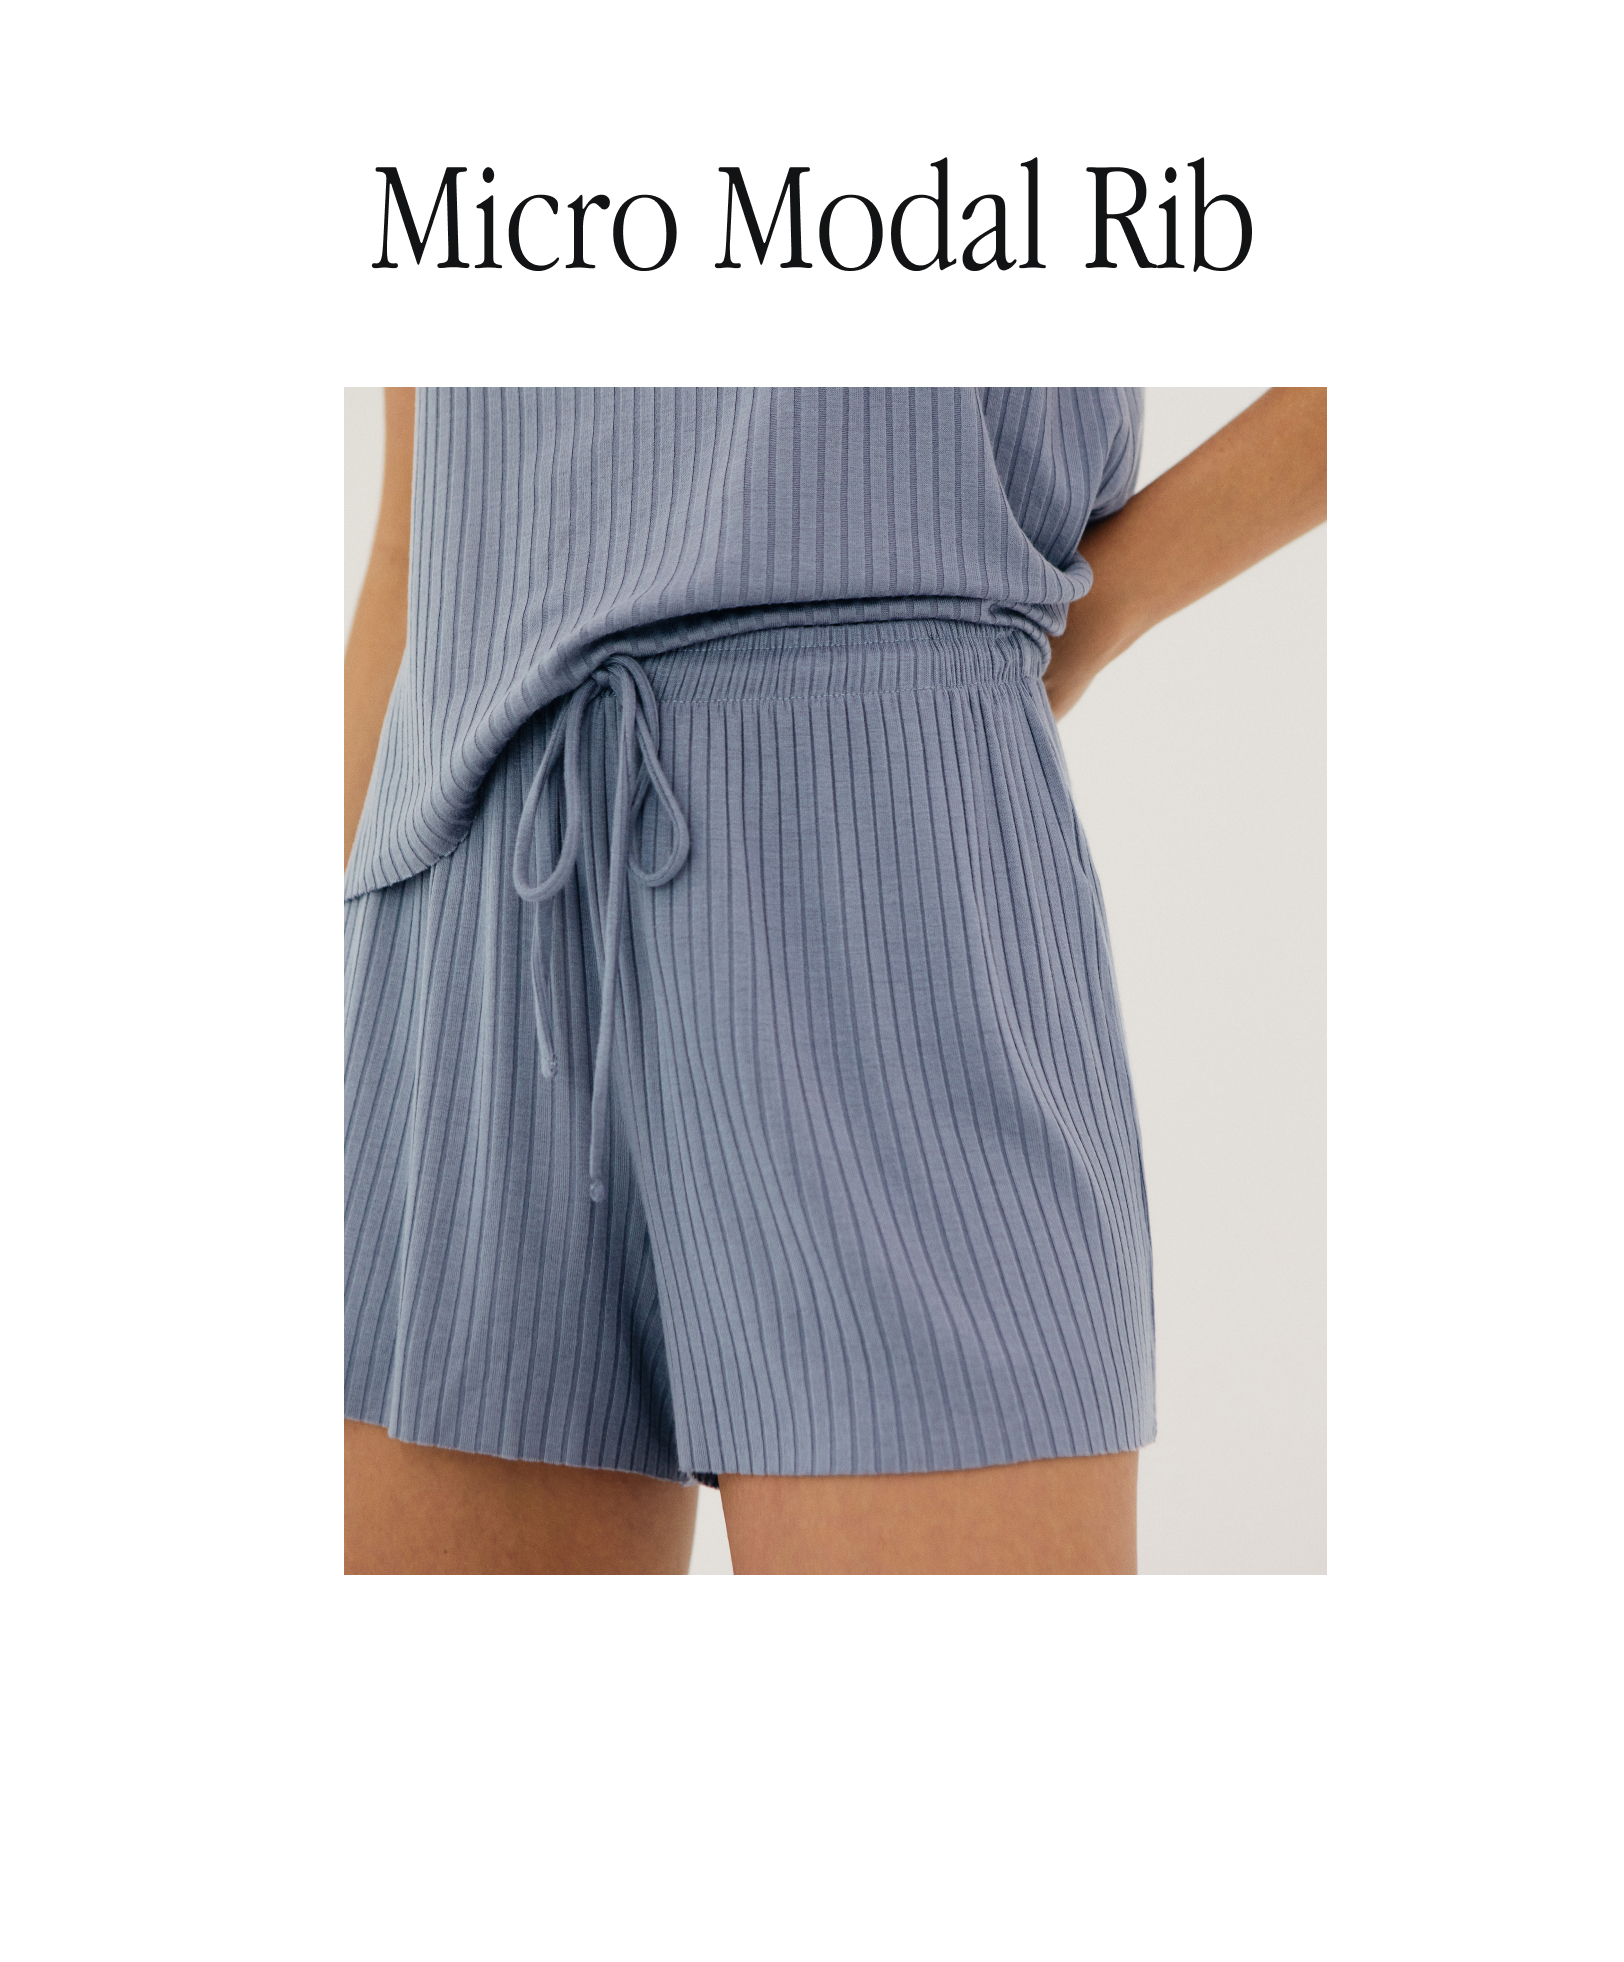 Shorts en micro modal rib